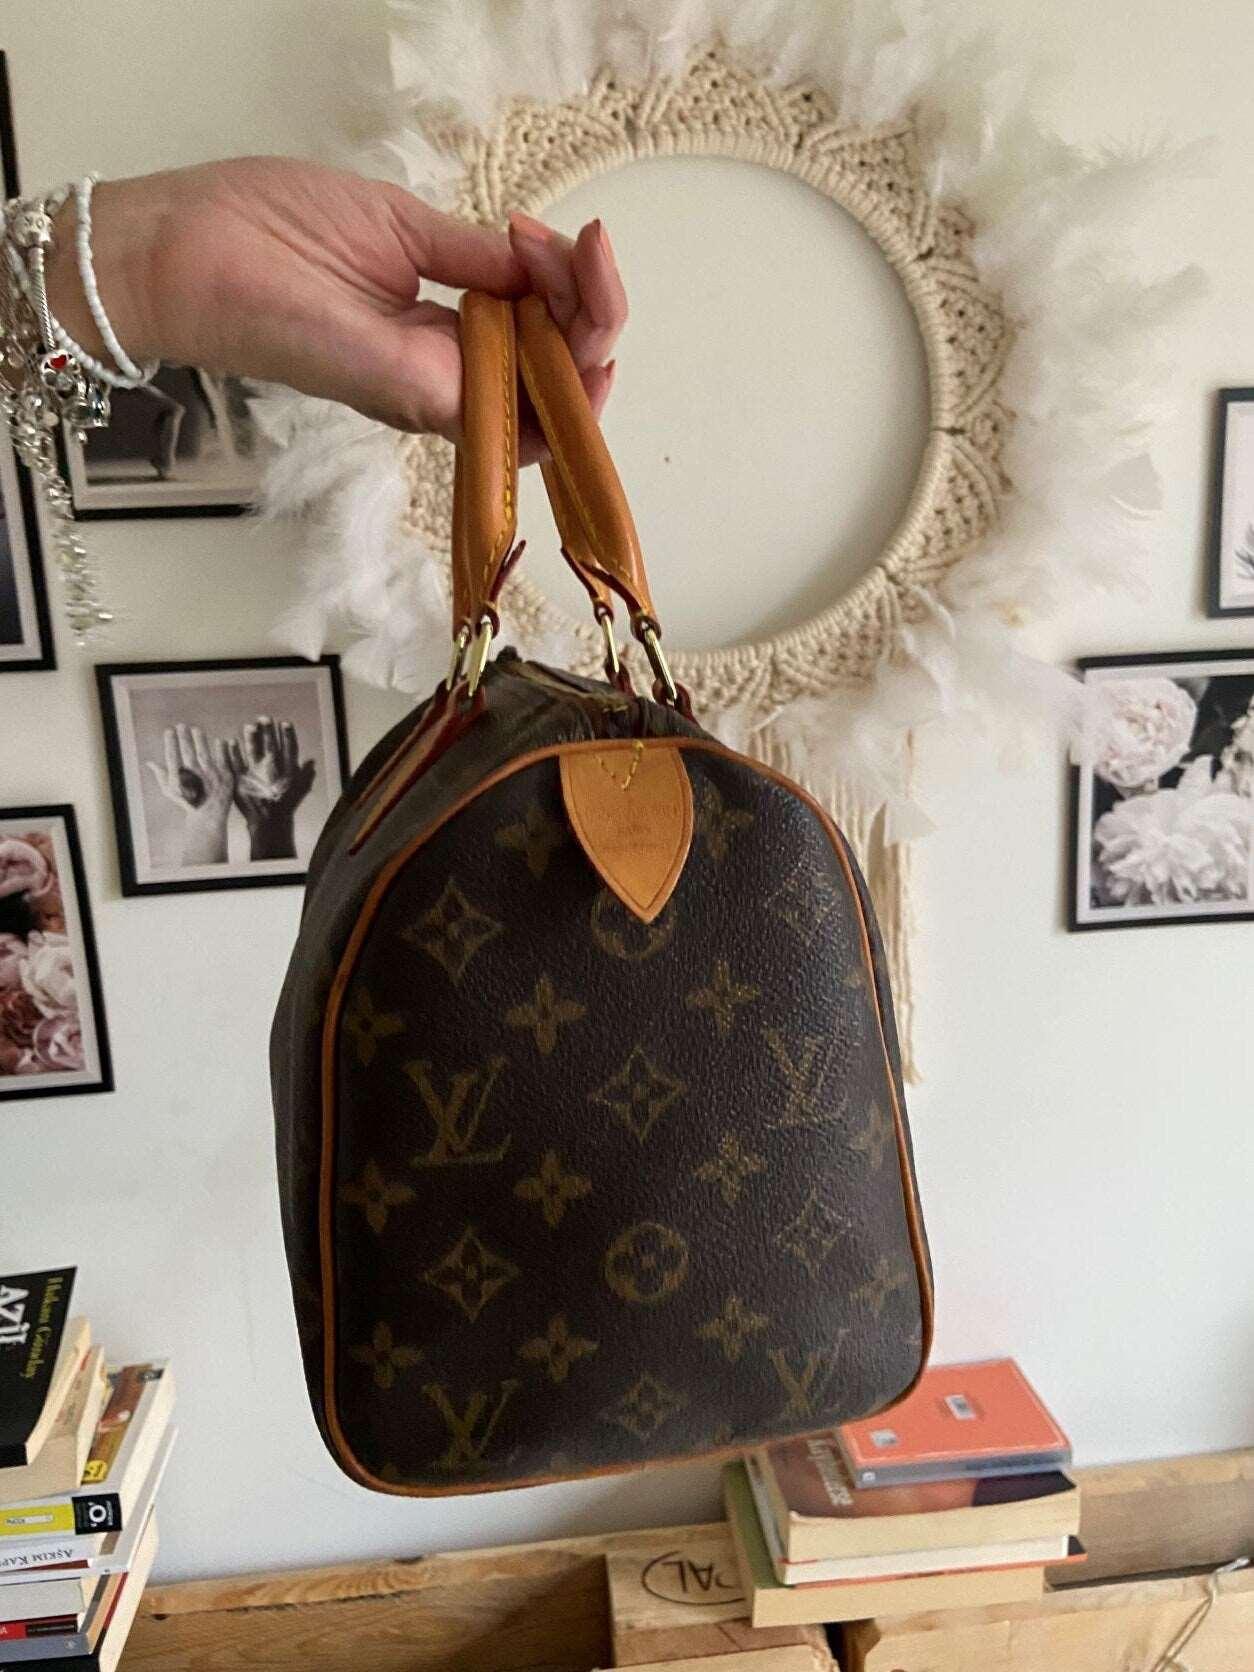 Authentic Louis Vuitton Monogram Speedy 25 Handbag - Tracesilver